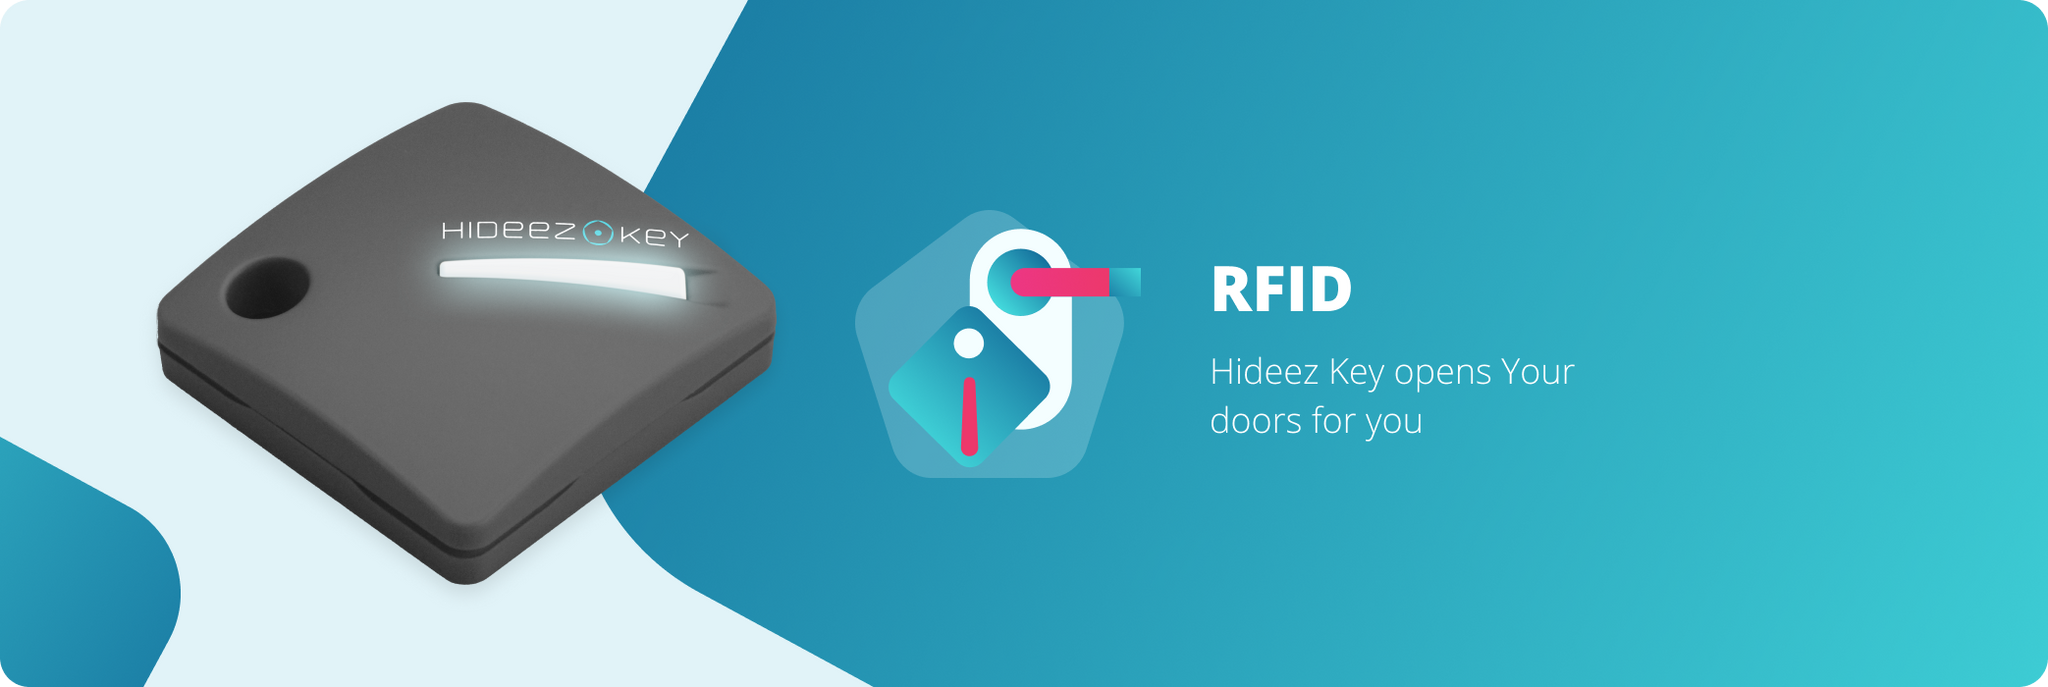 RFID Hideez Key opens doors for you